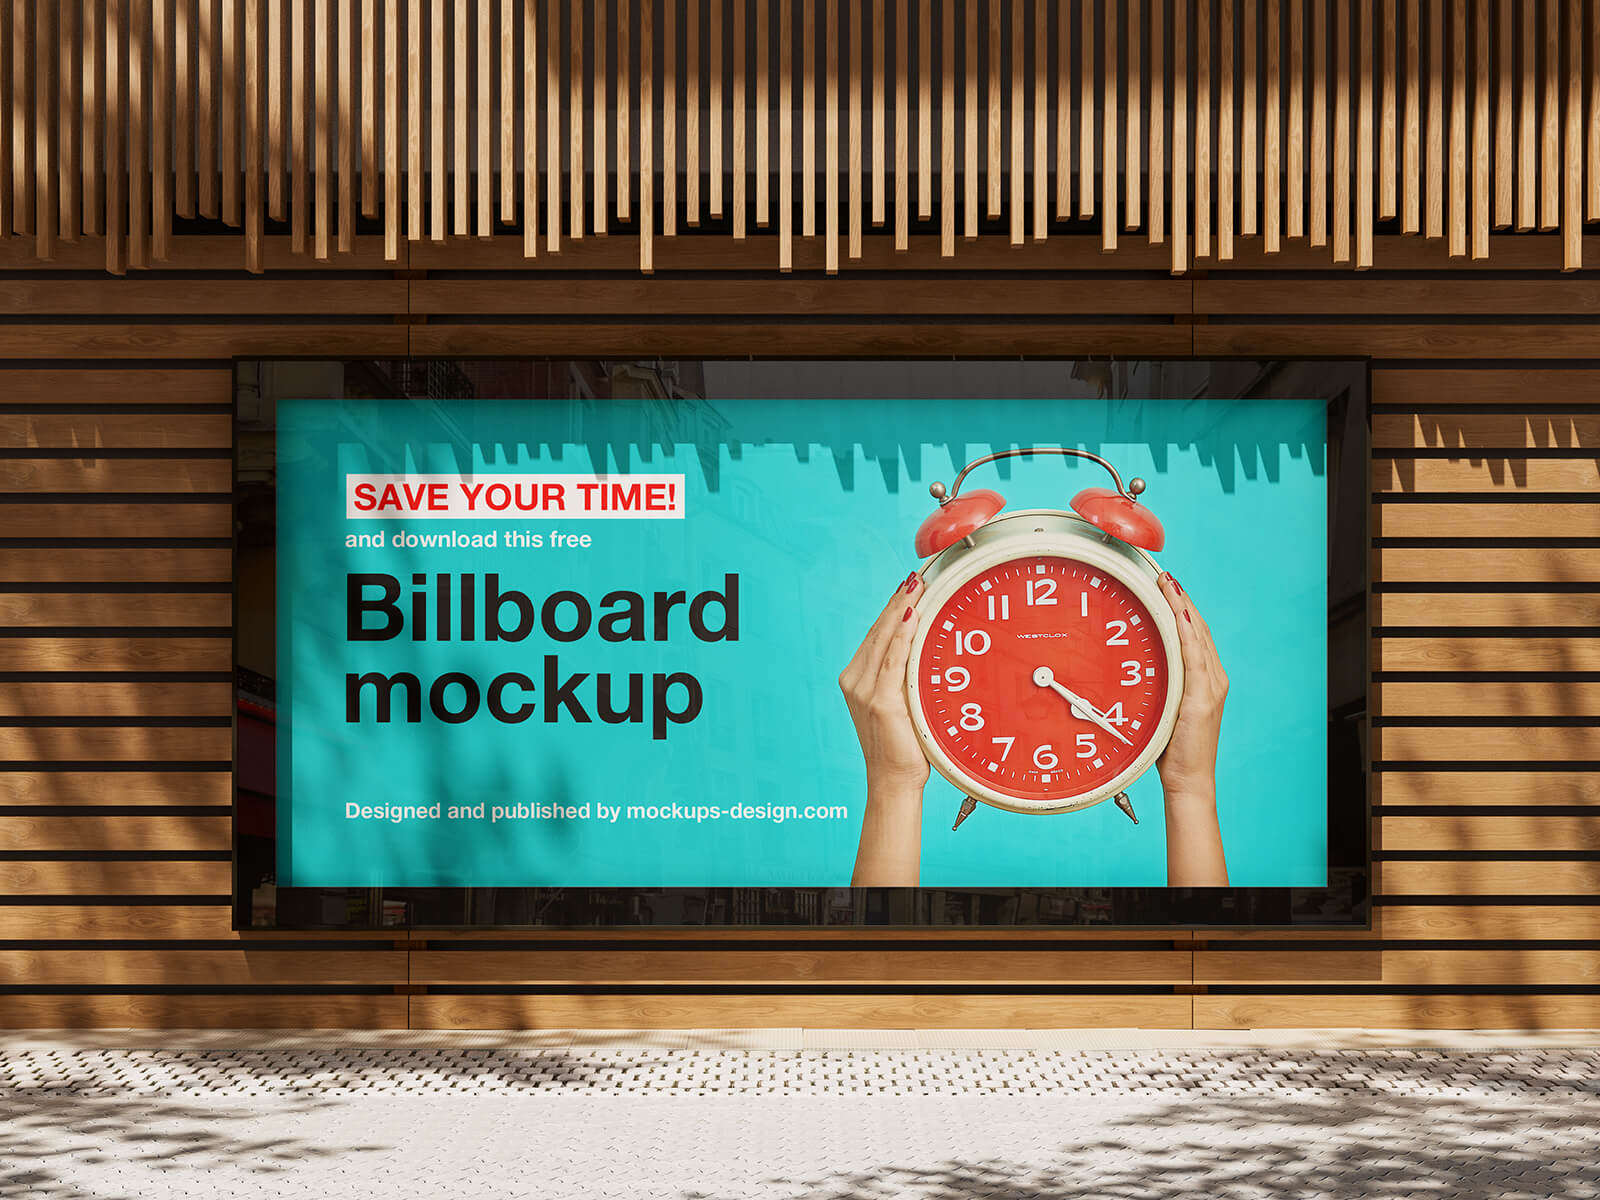 Free Wooden Wall Framed Billboard Mockup PSD